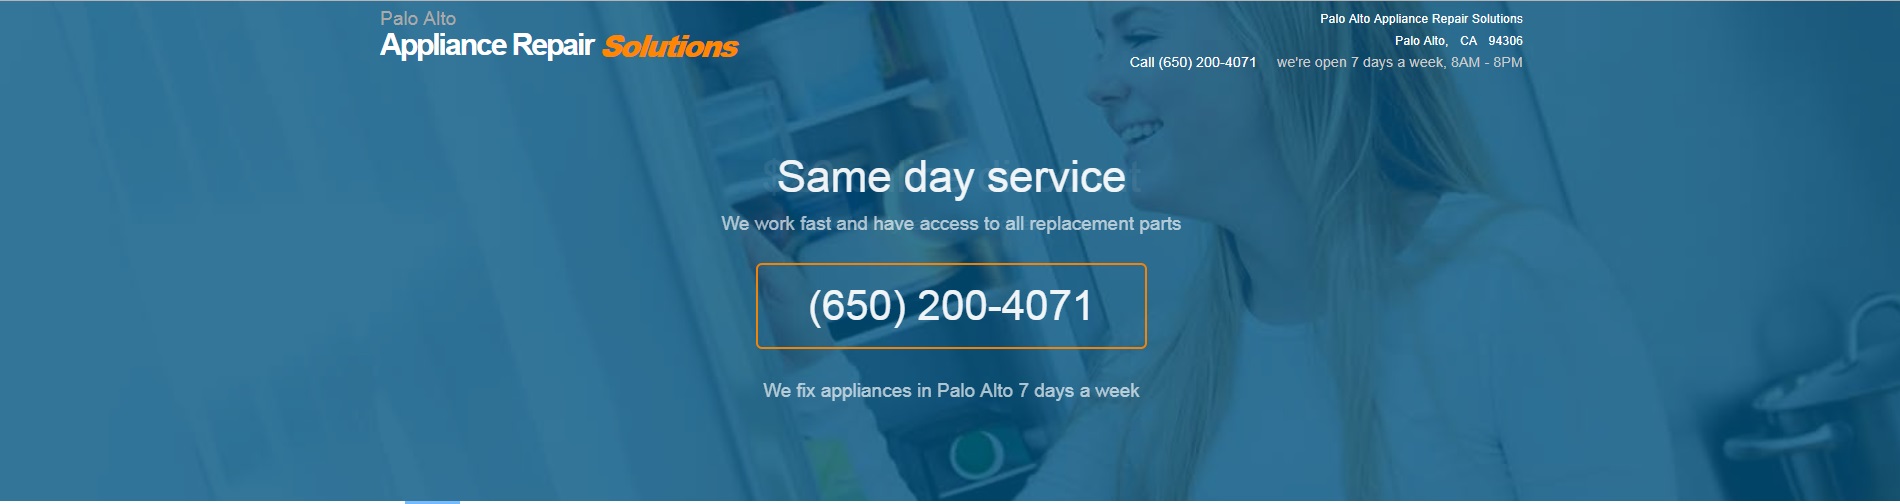 Palo Alto Appliance Repair Solutions